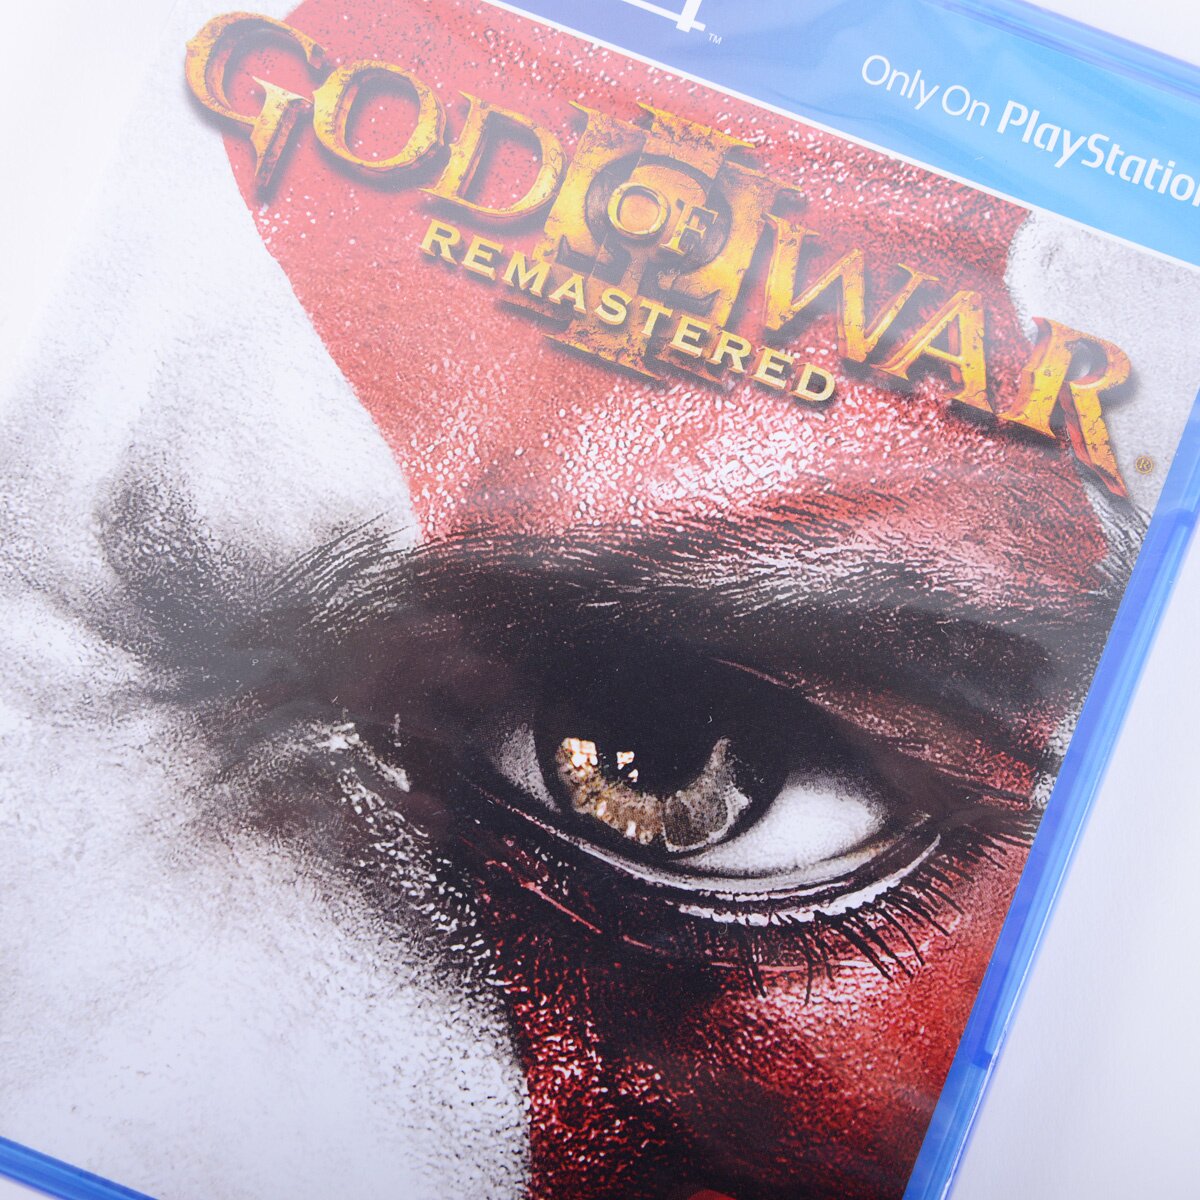 PS4 God of War 3 - Remastered